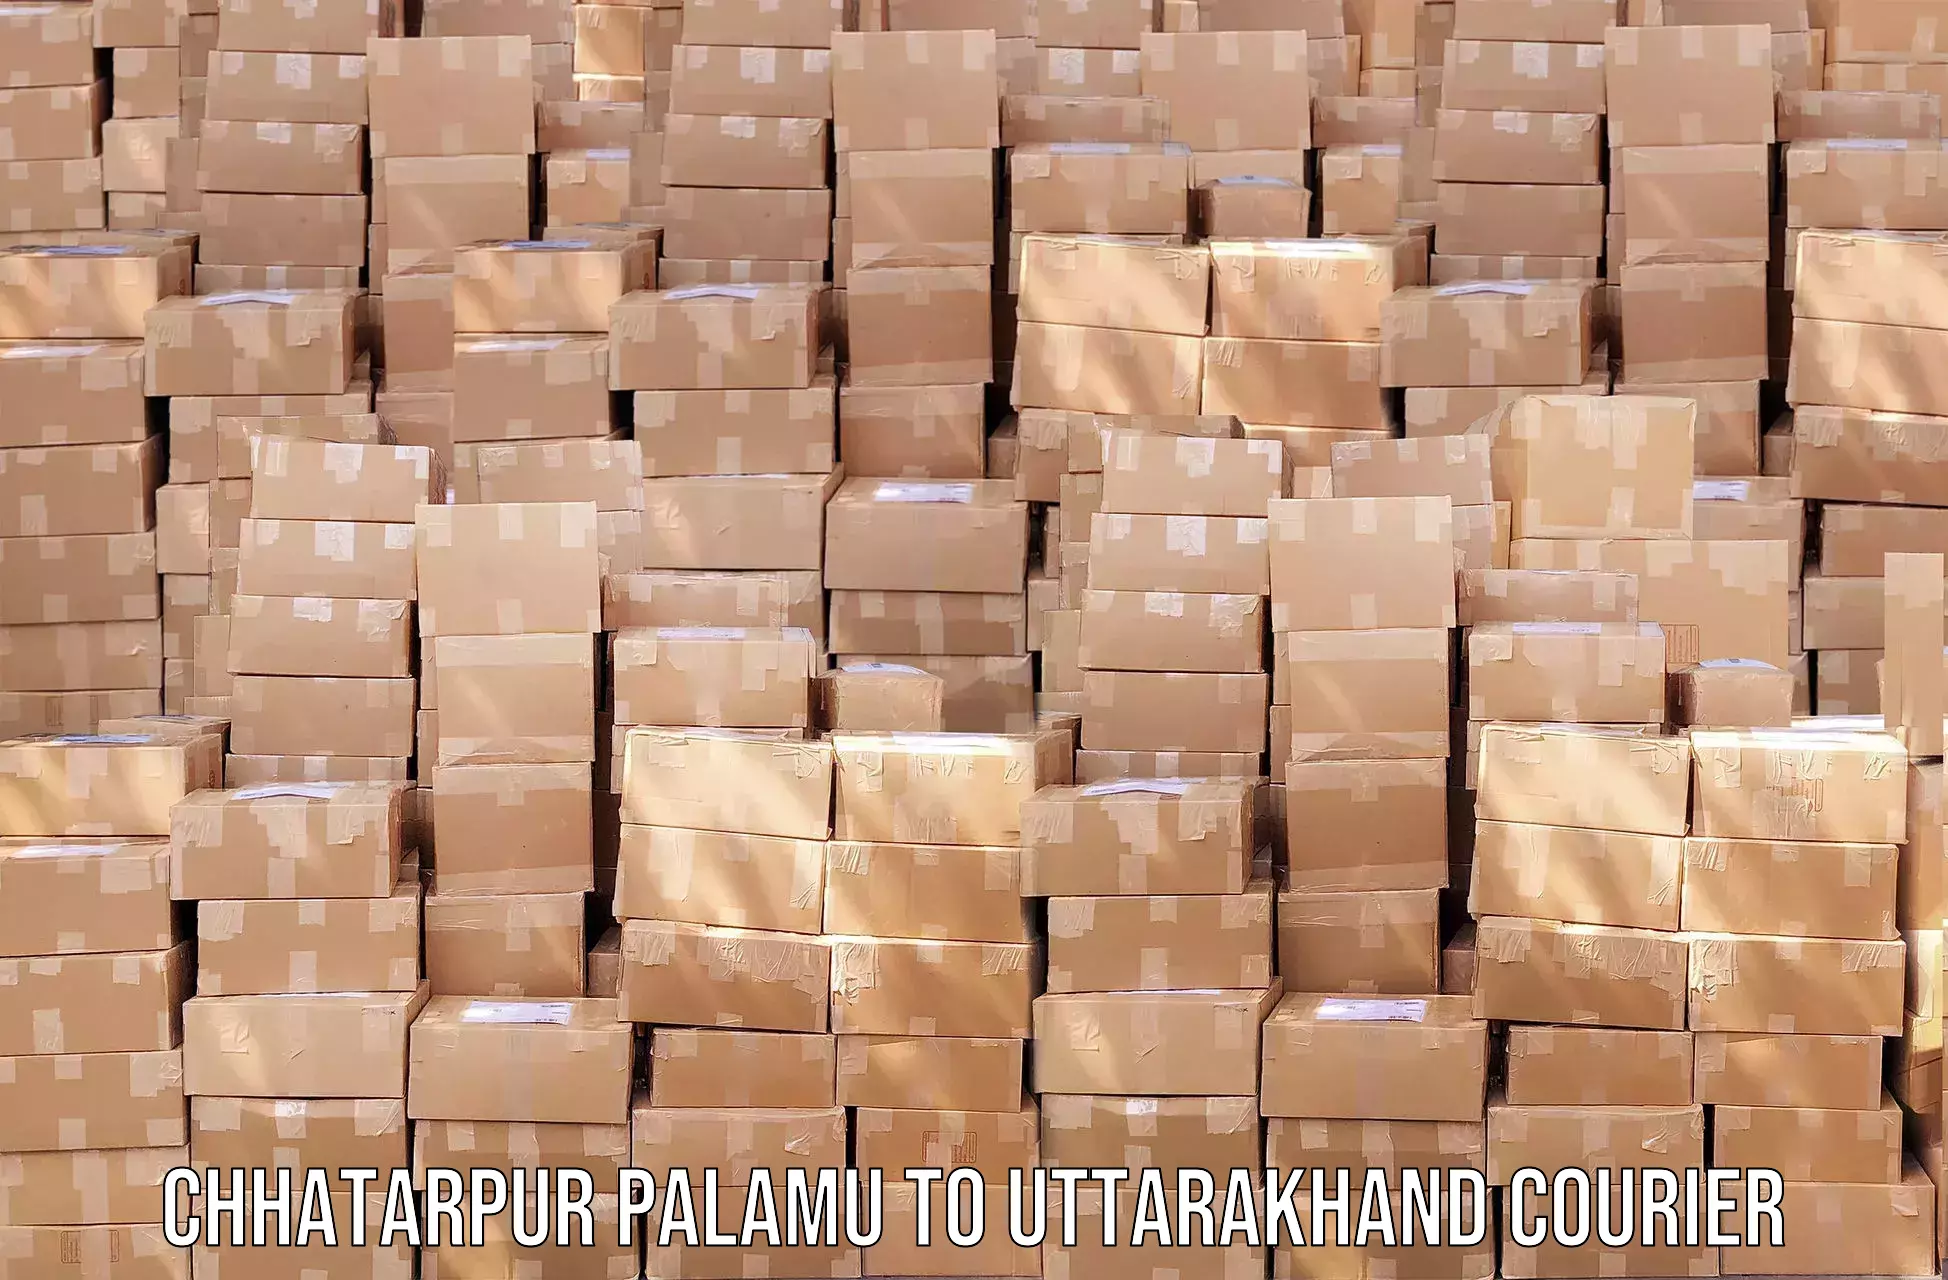 Specialized shipment handling Chhatarpur Palamu to Almora